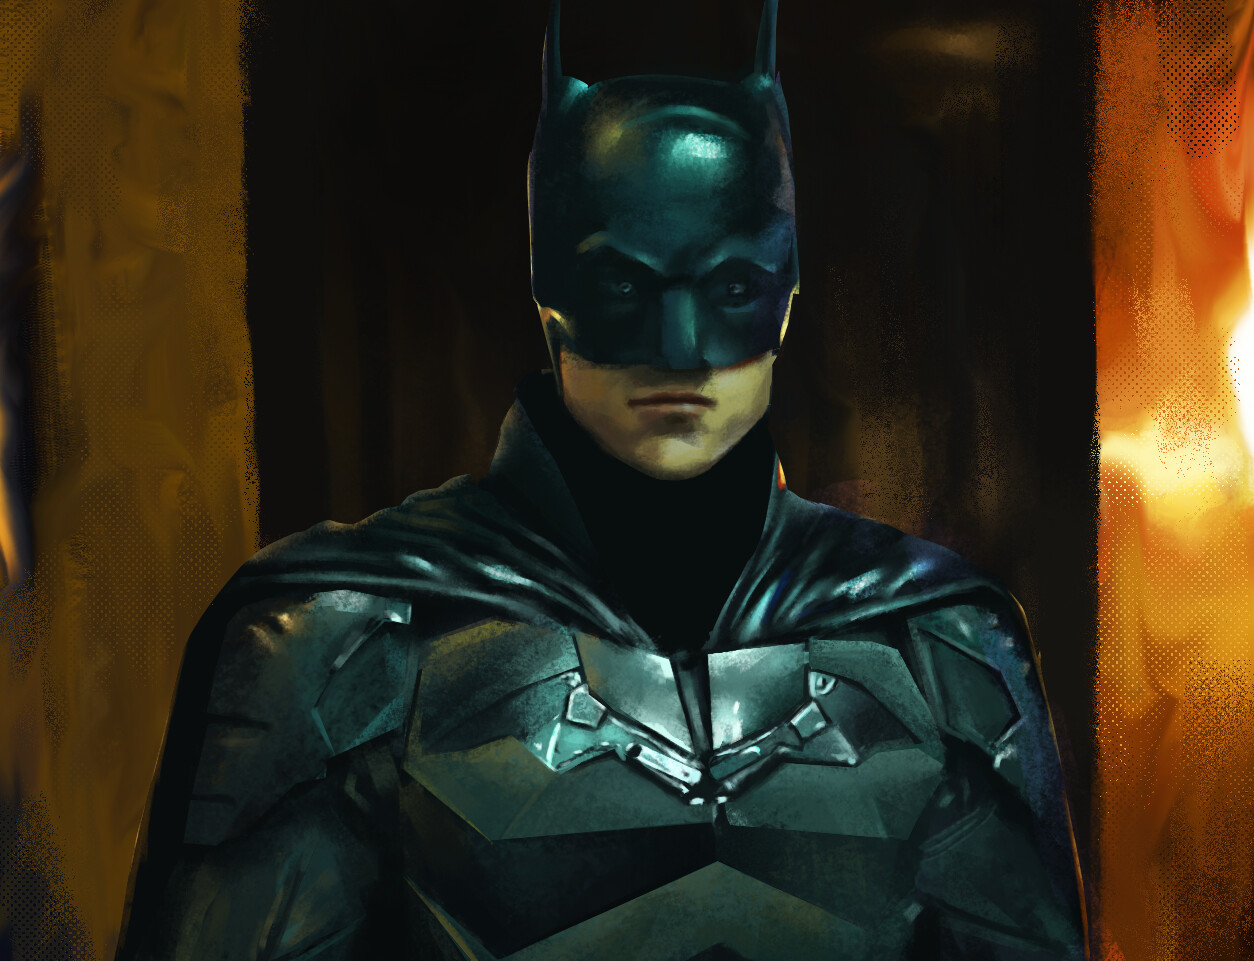 ArtStation - batman portrait